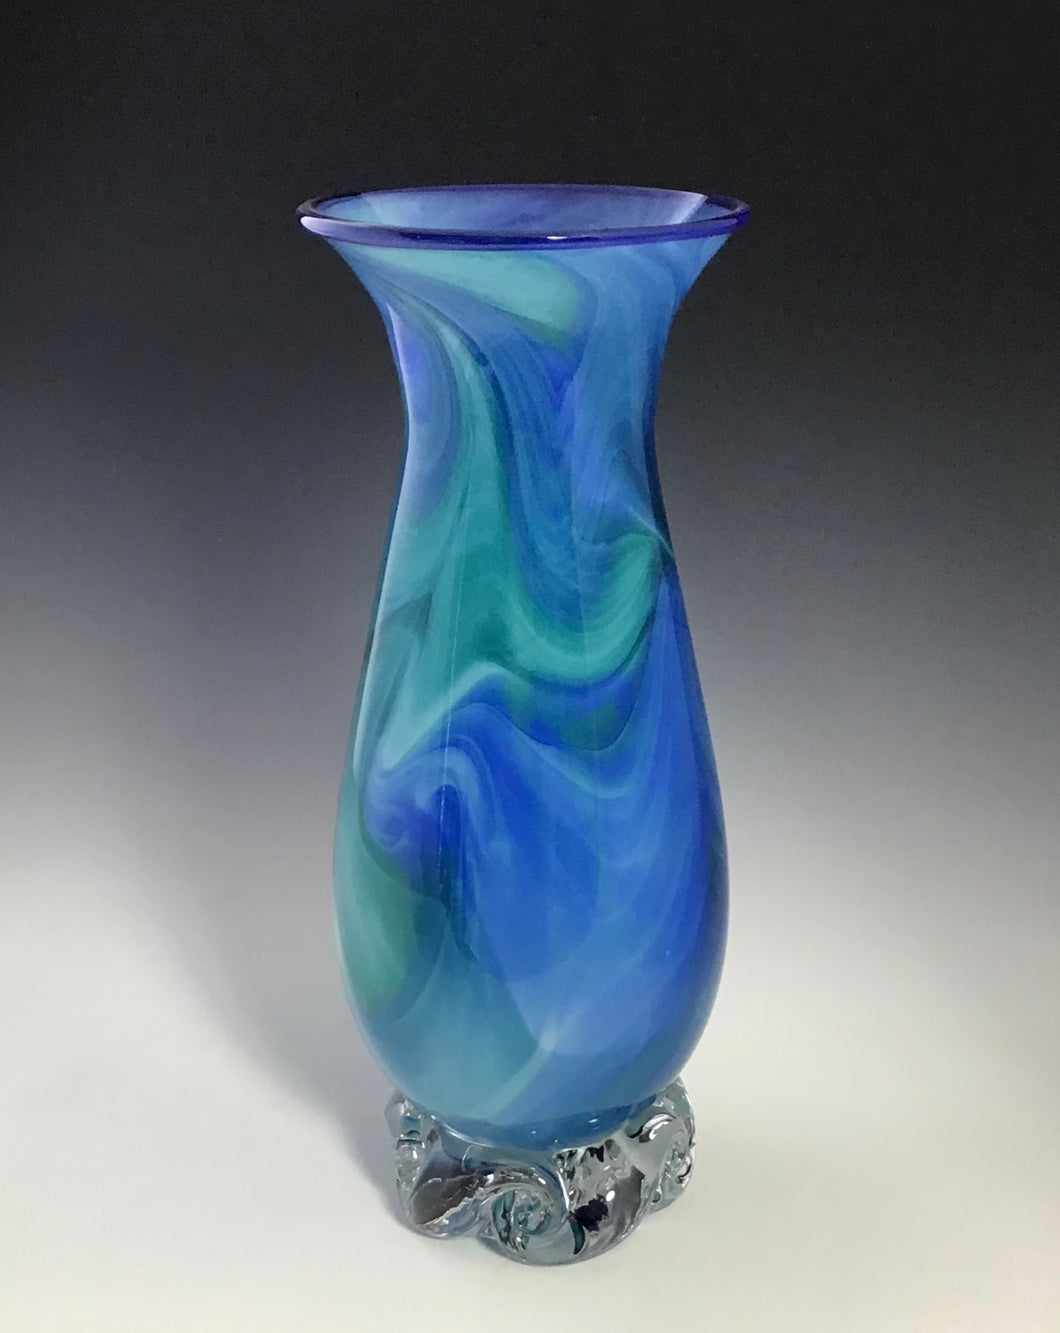 Tidewater Vase